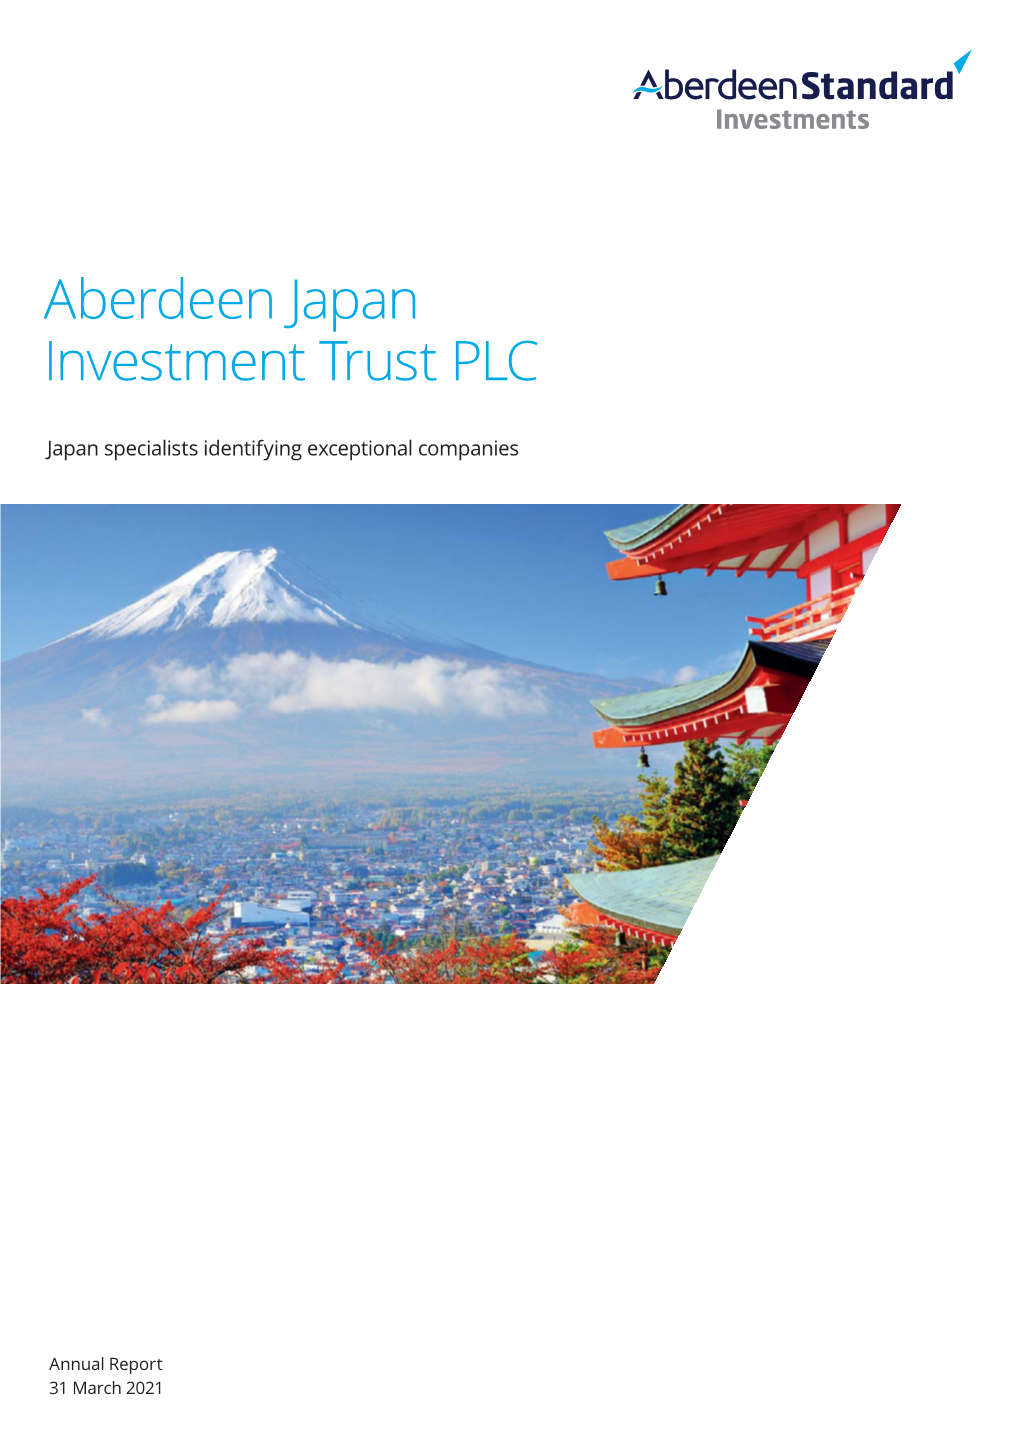 Aberdeen Japan Investment Trust PLC